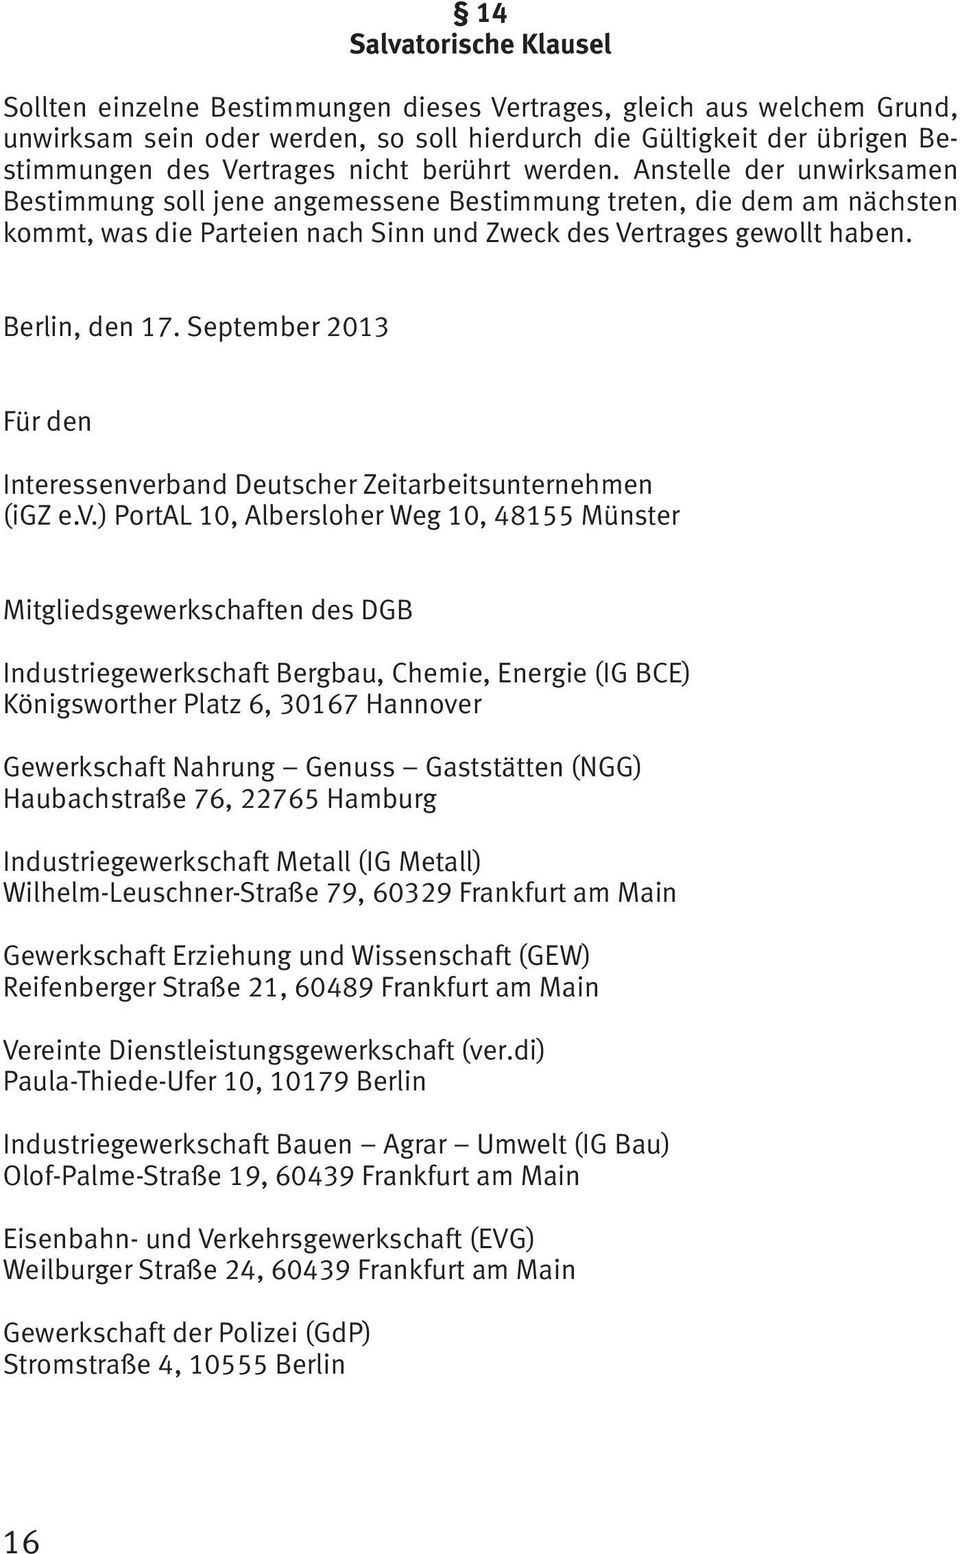 Berlin, den 17. September 2013 Für den Interessenve